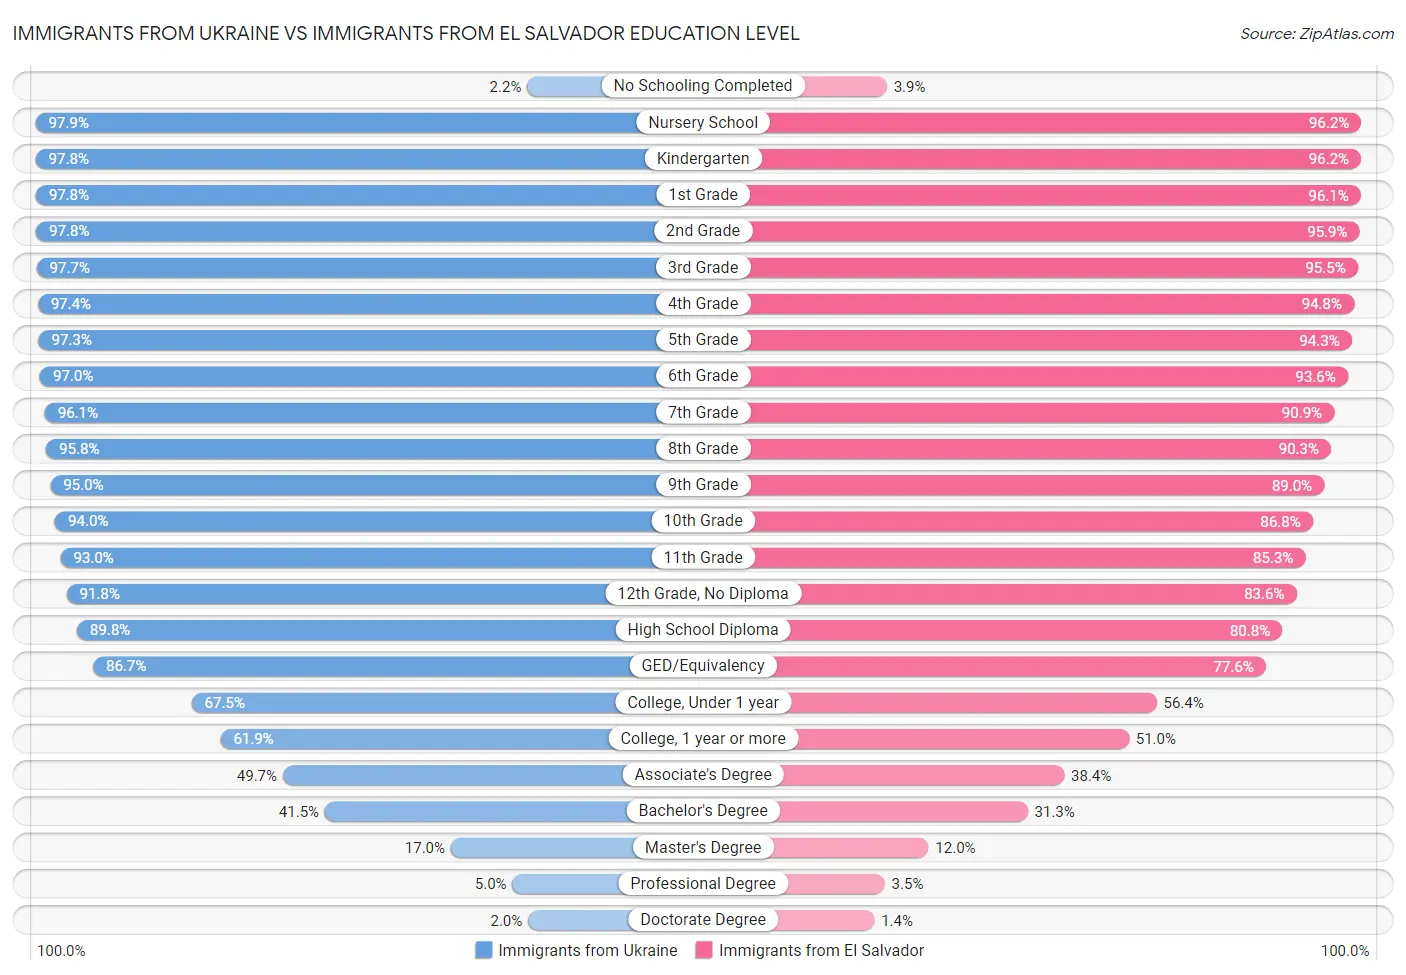 Immigrants from Ukraine vs Immigrants from El Salvador Education Level